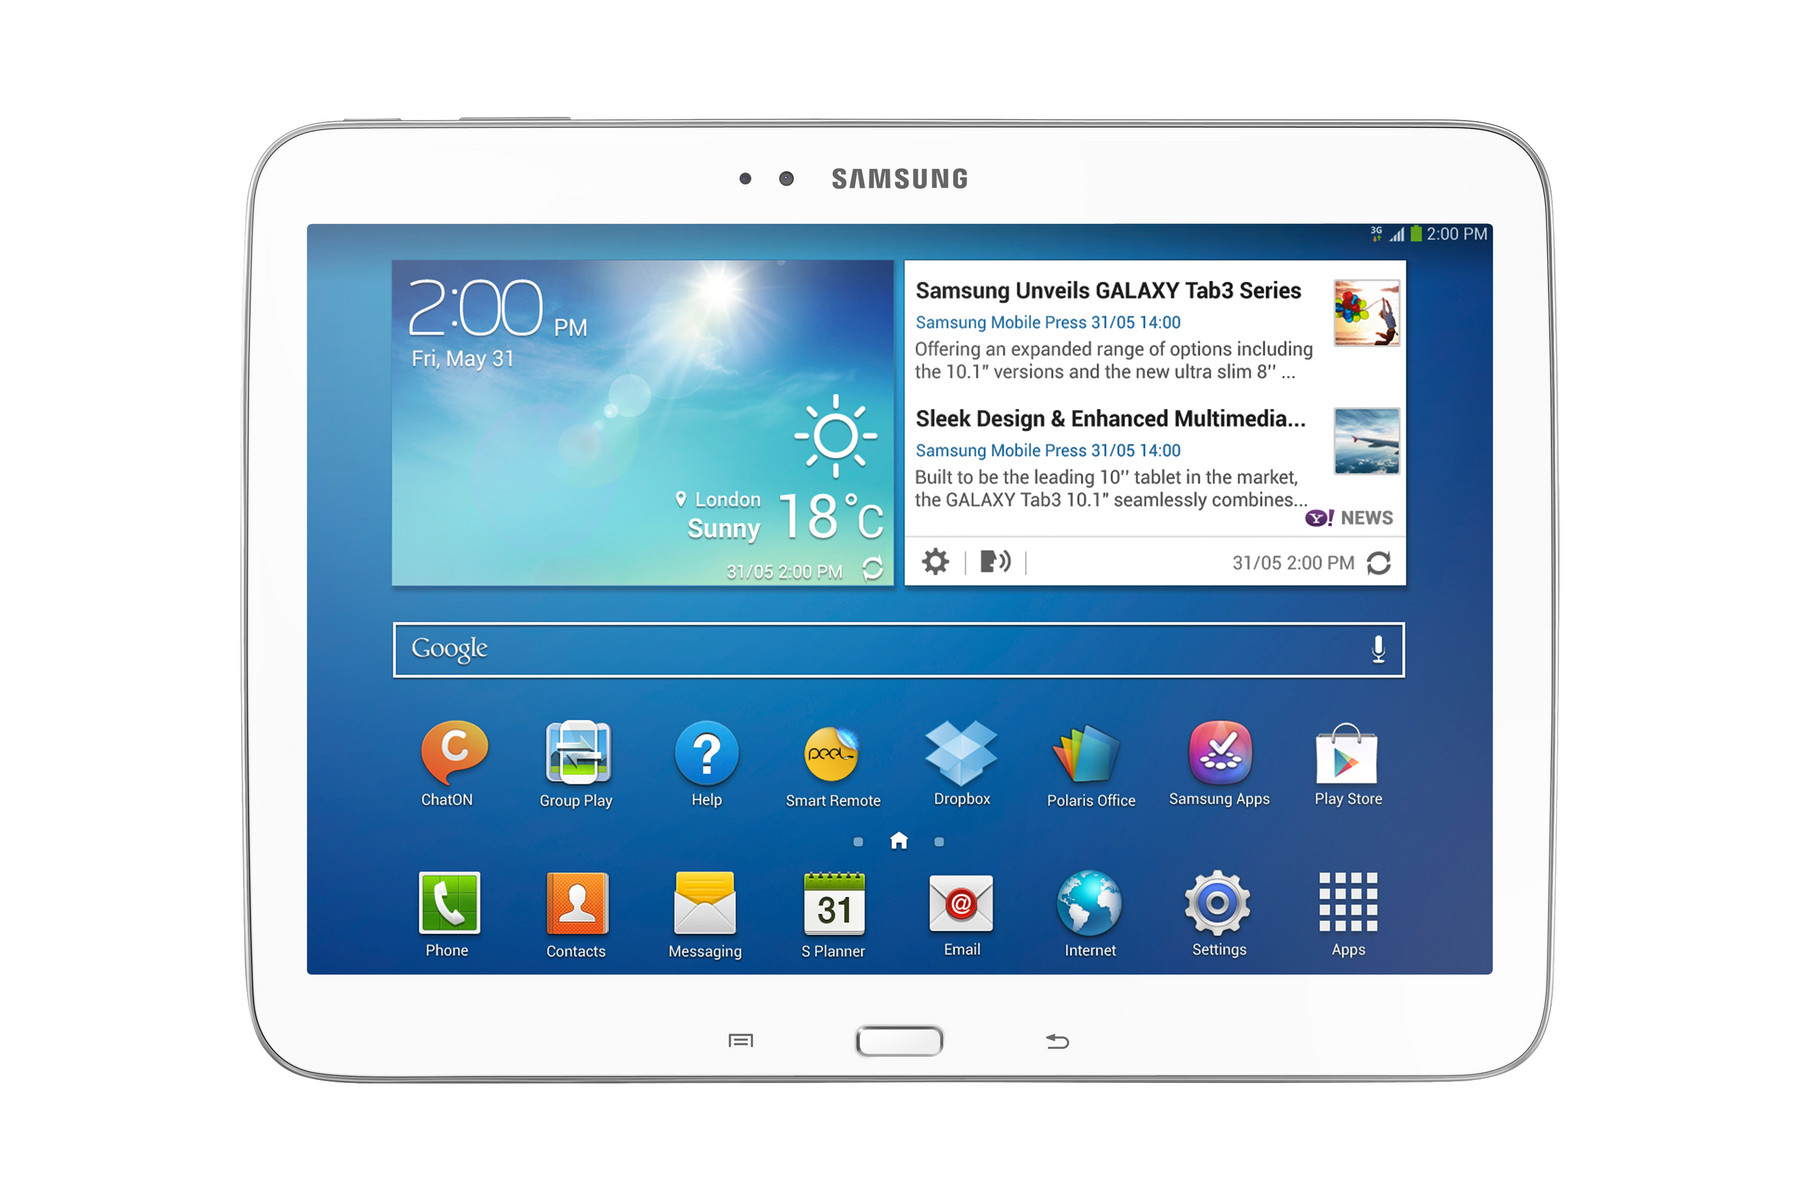 Samsung Galaxy Tab 3 10.1 inch - External Reviews